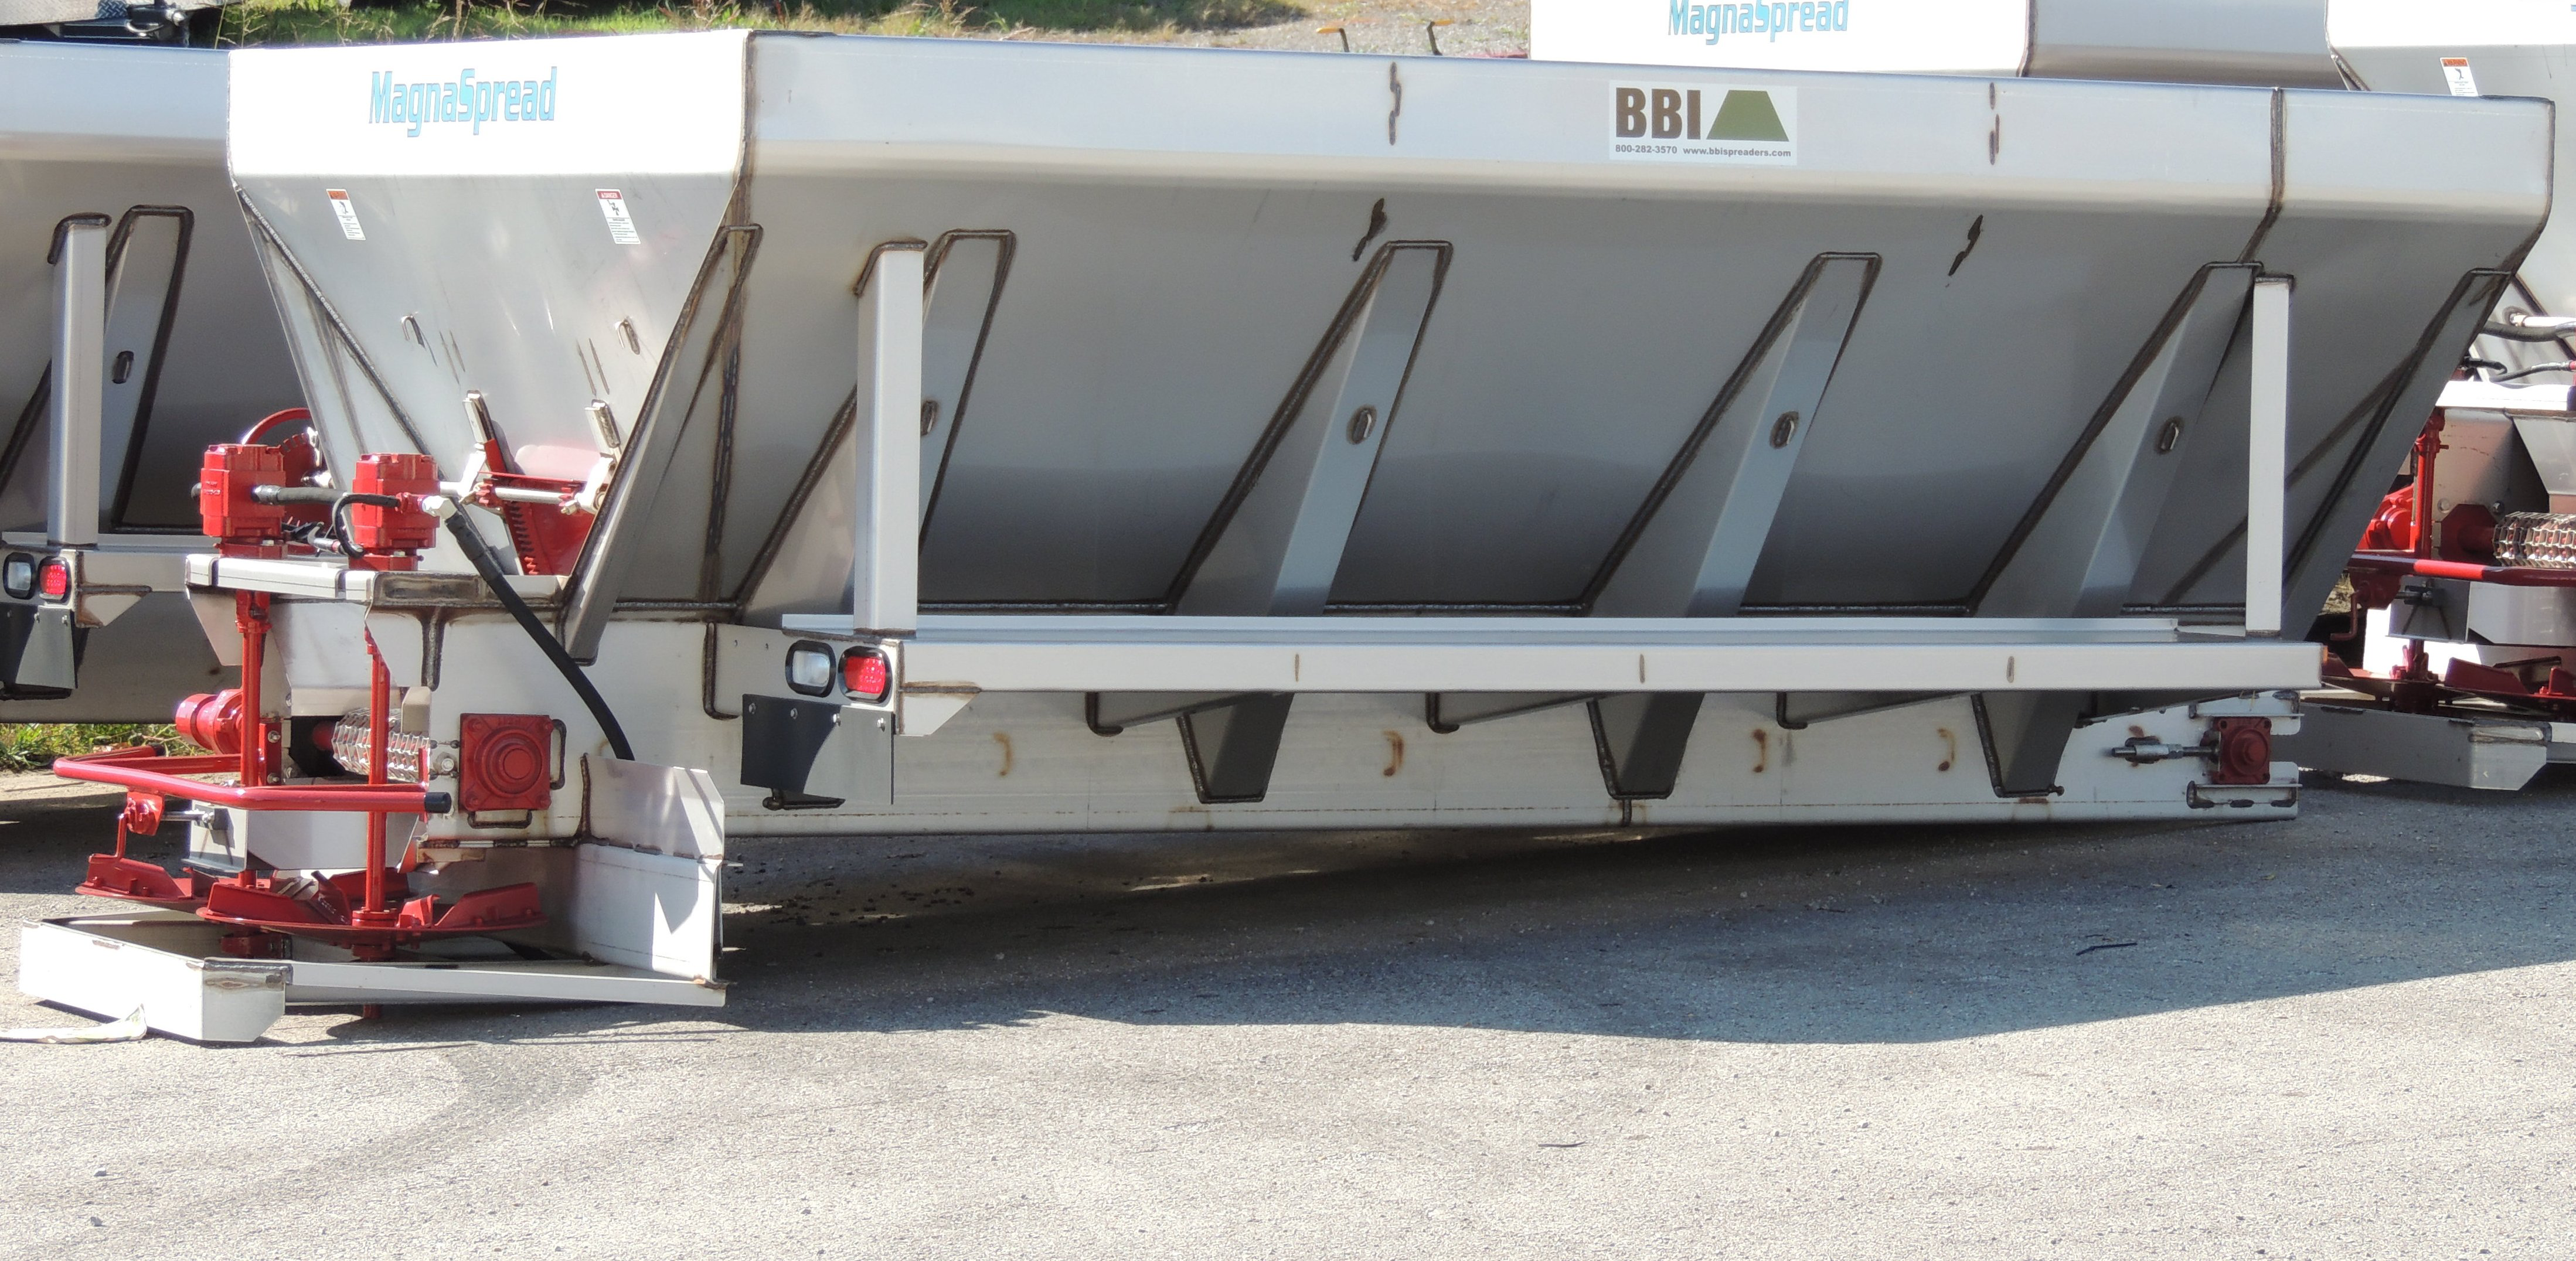 BBI Magna Spread Truck Mount Bed Image